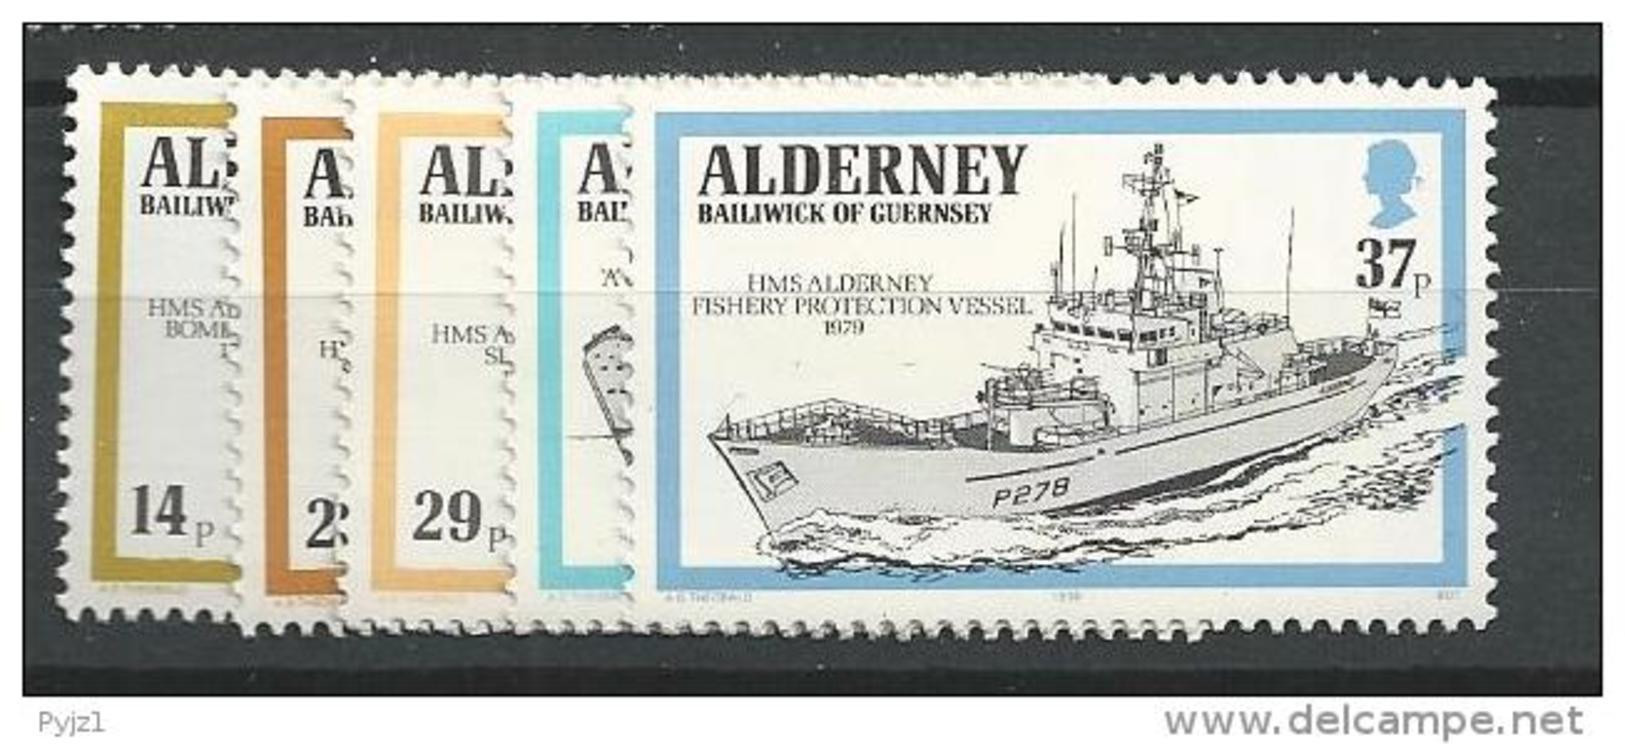 1990 MNH Alderney Postfris - Maritime